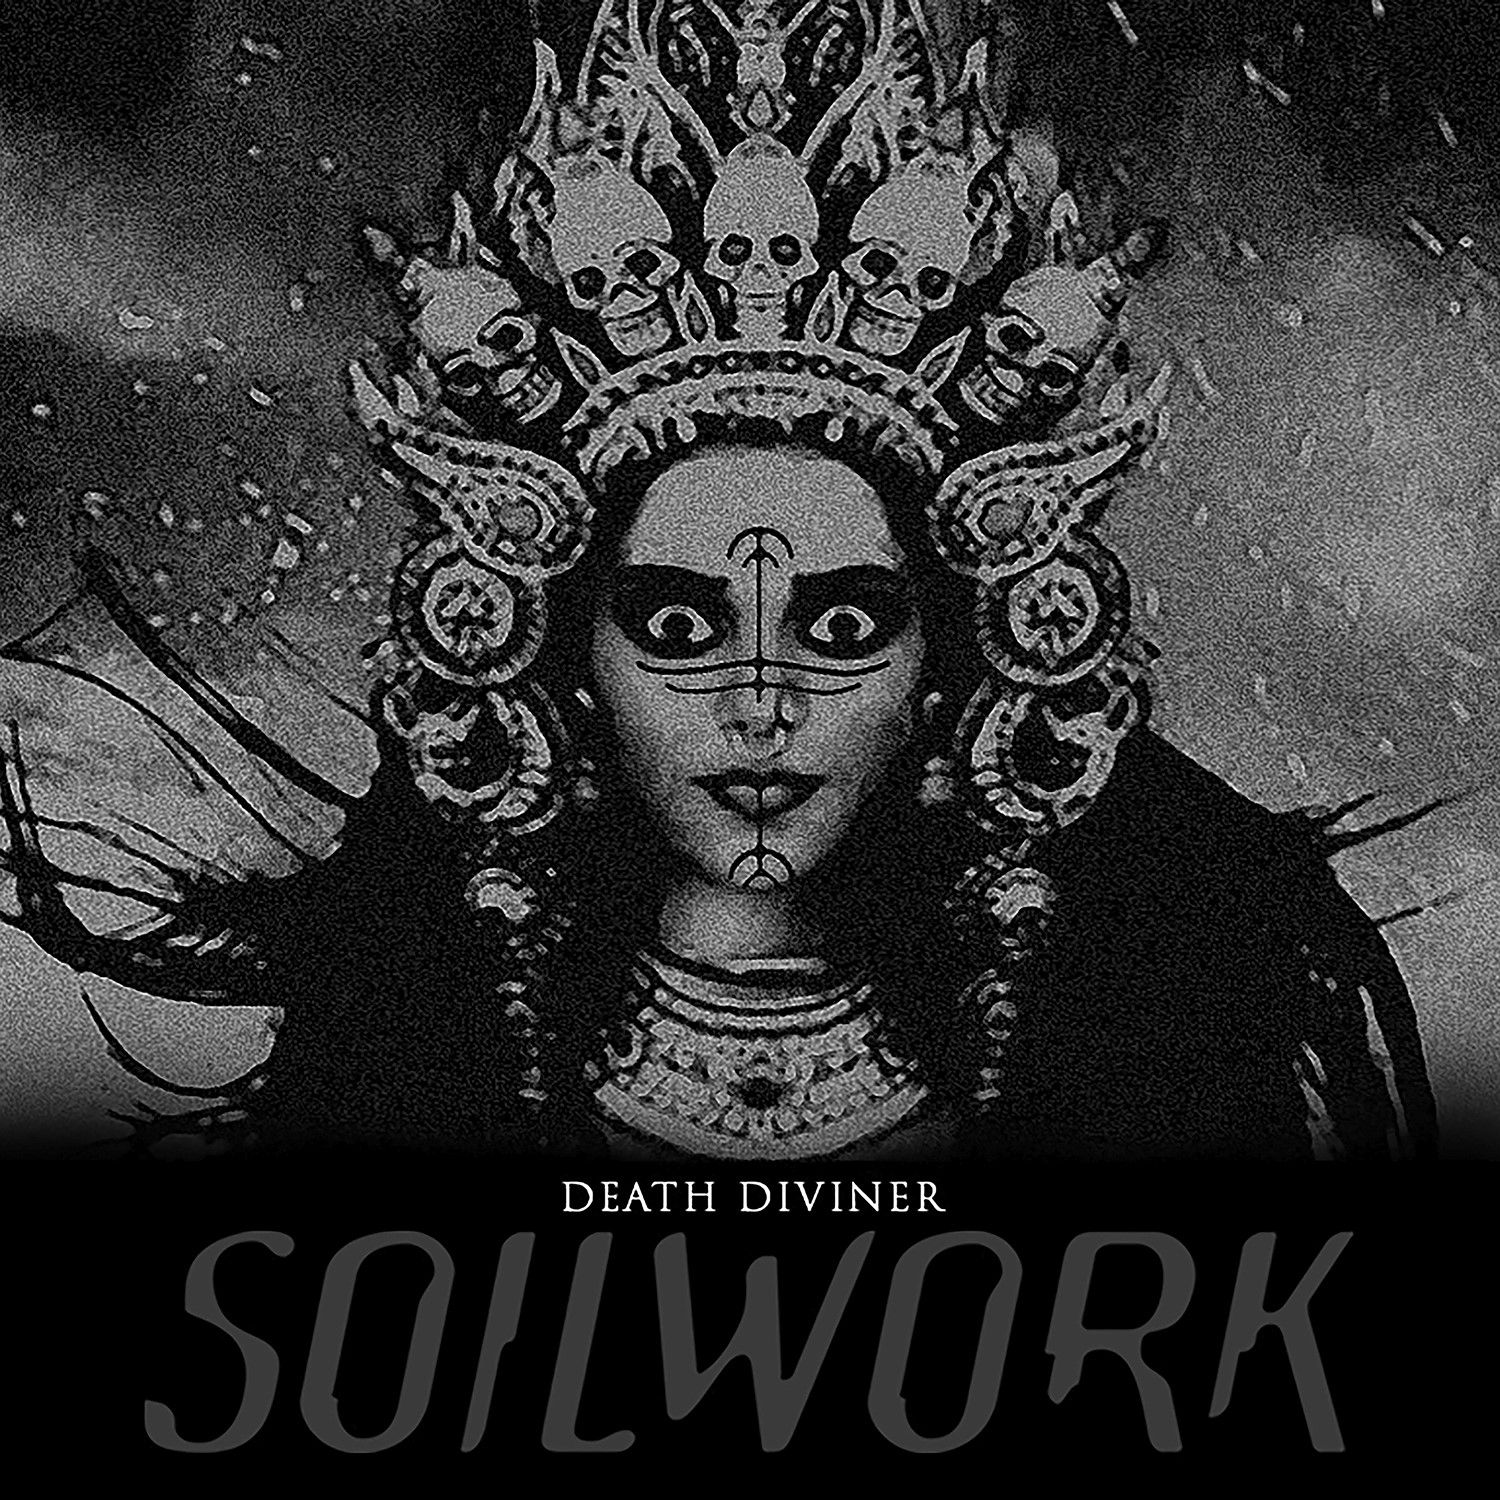 'Death Diviner'-Videopremiere mit Livechat morgen um 19:00 Uhr